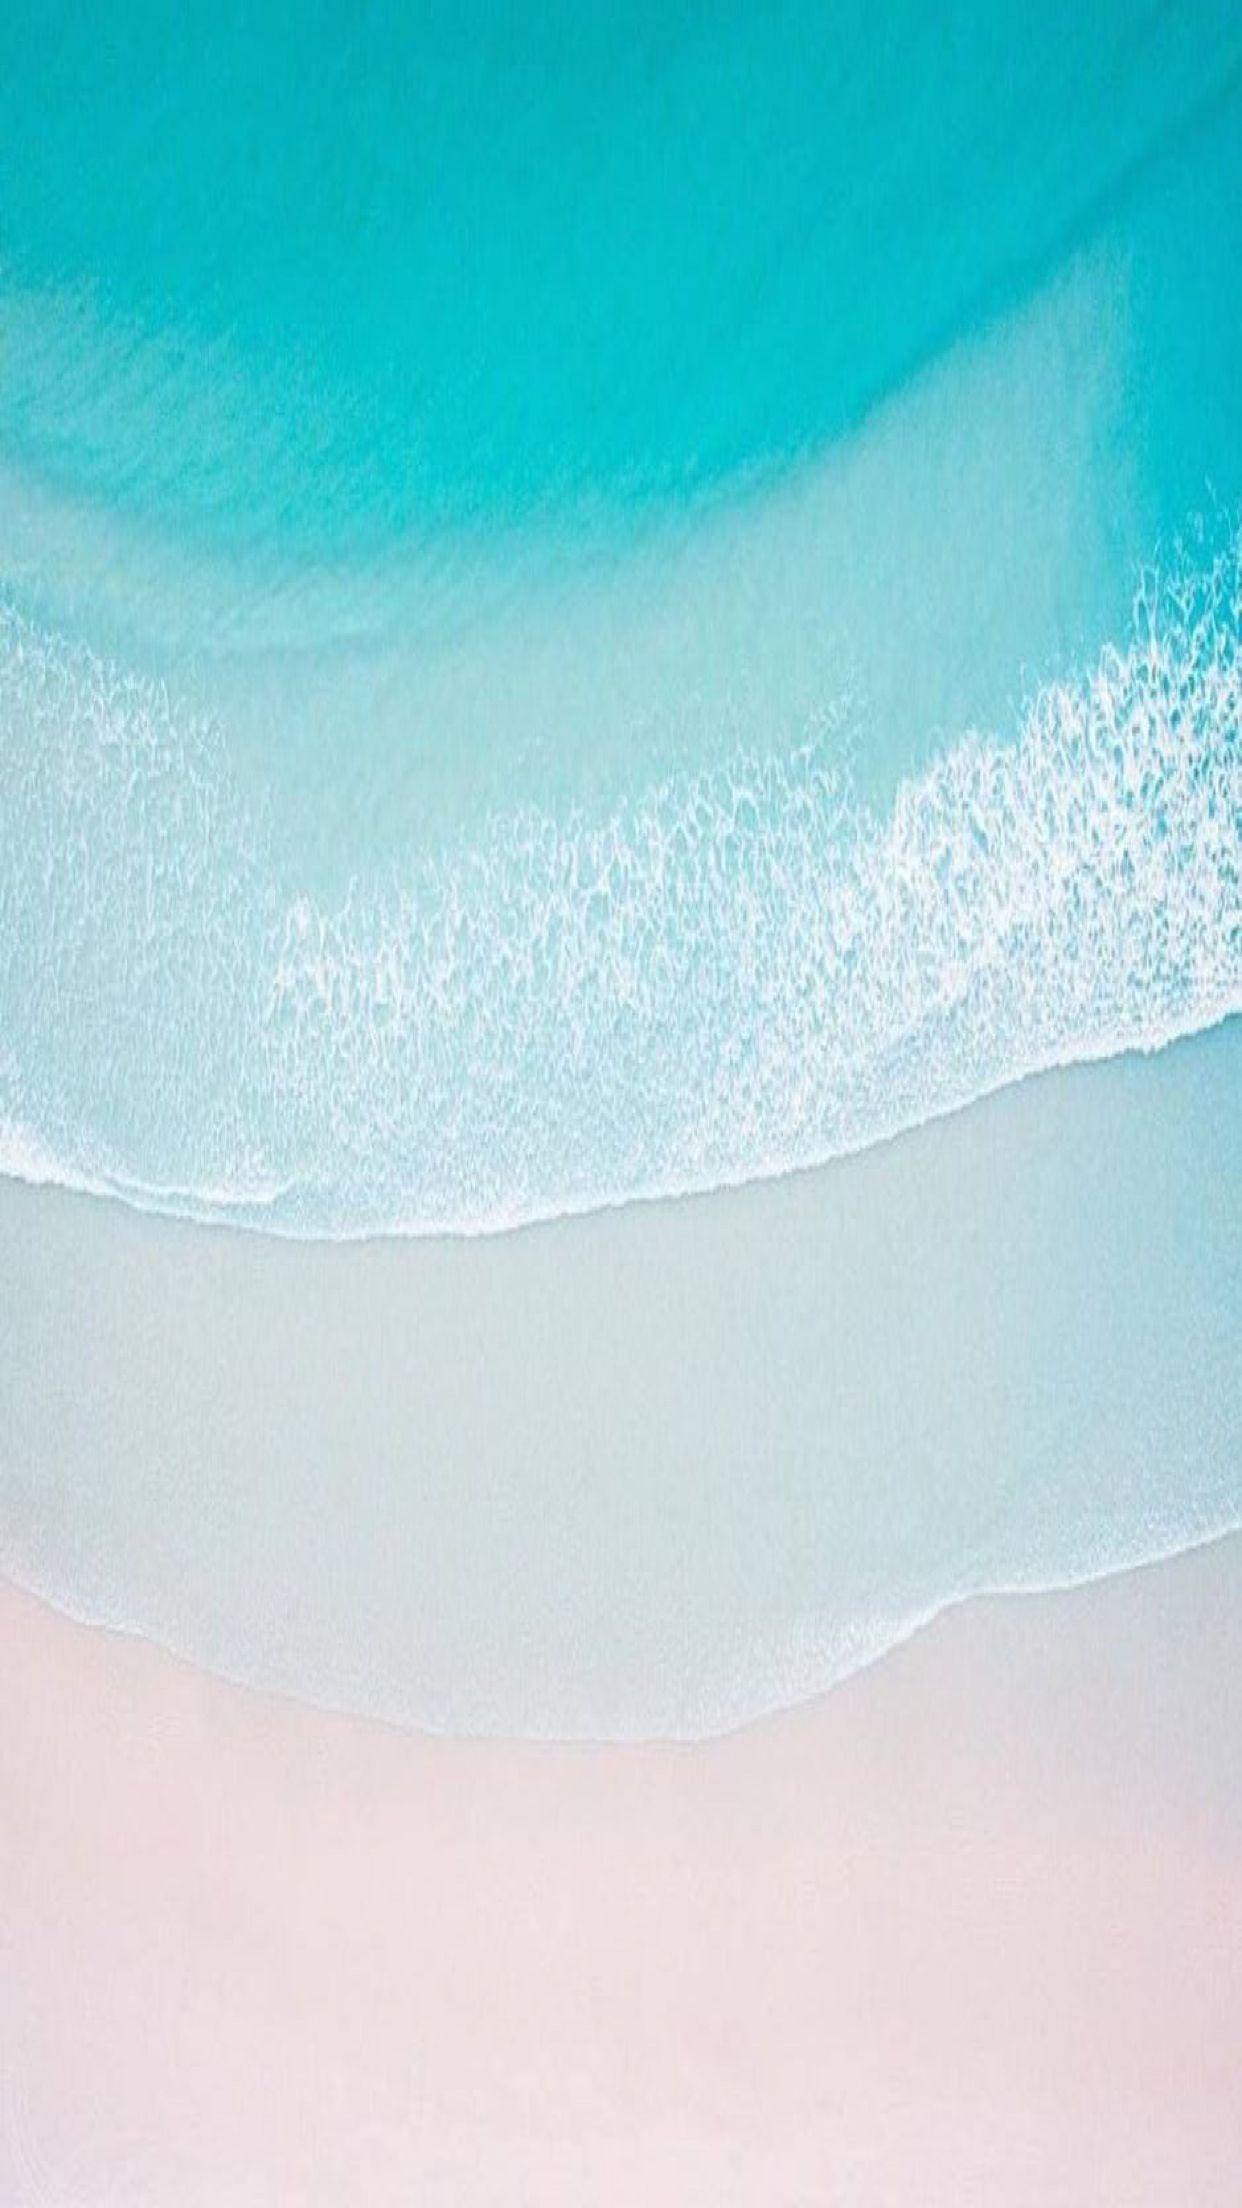 1242x2208 iOS 11, Màu ngọc lam, cát, bãi biển, đại dương, trừu tượng, táo, hình nền, iPhone, sạch, b.  Papel de parede turquesa, Papel de parede de verão, Papel de parede do iphone